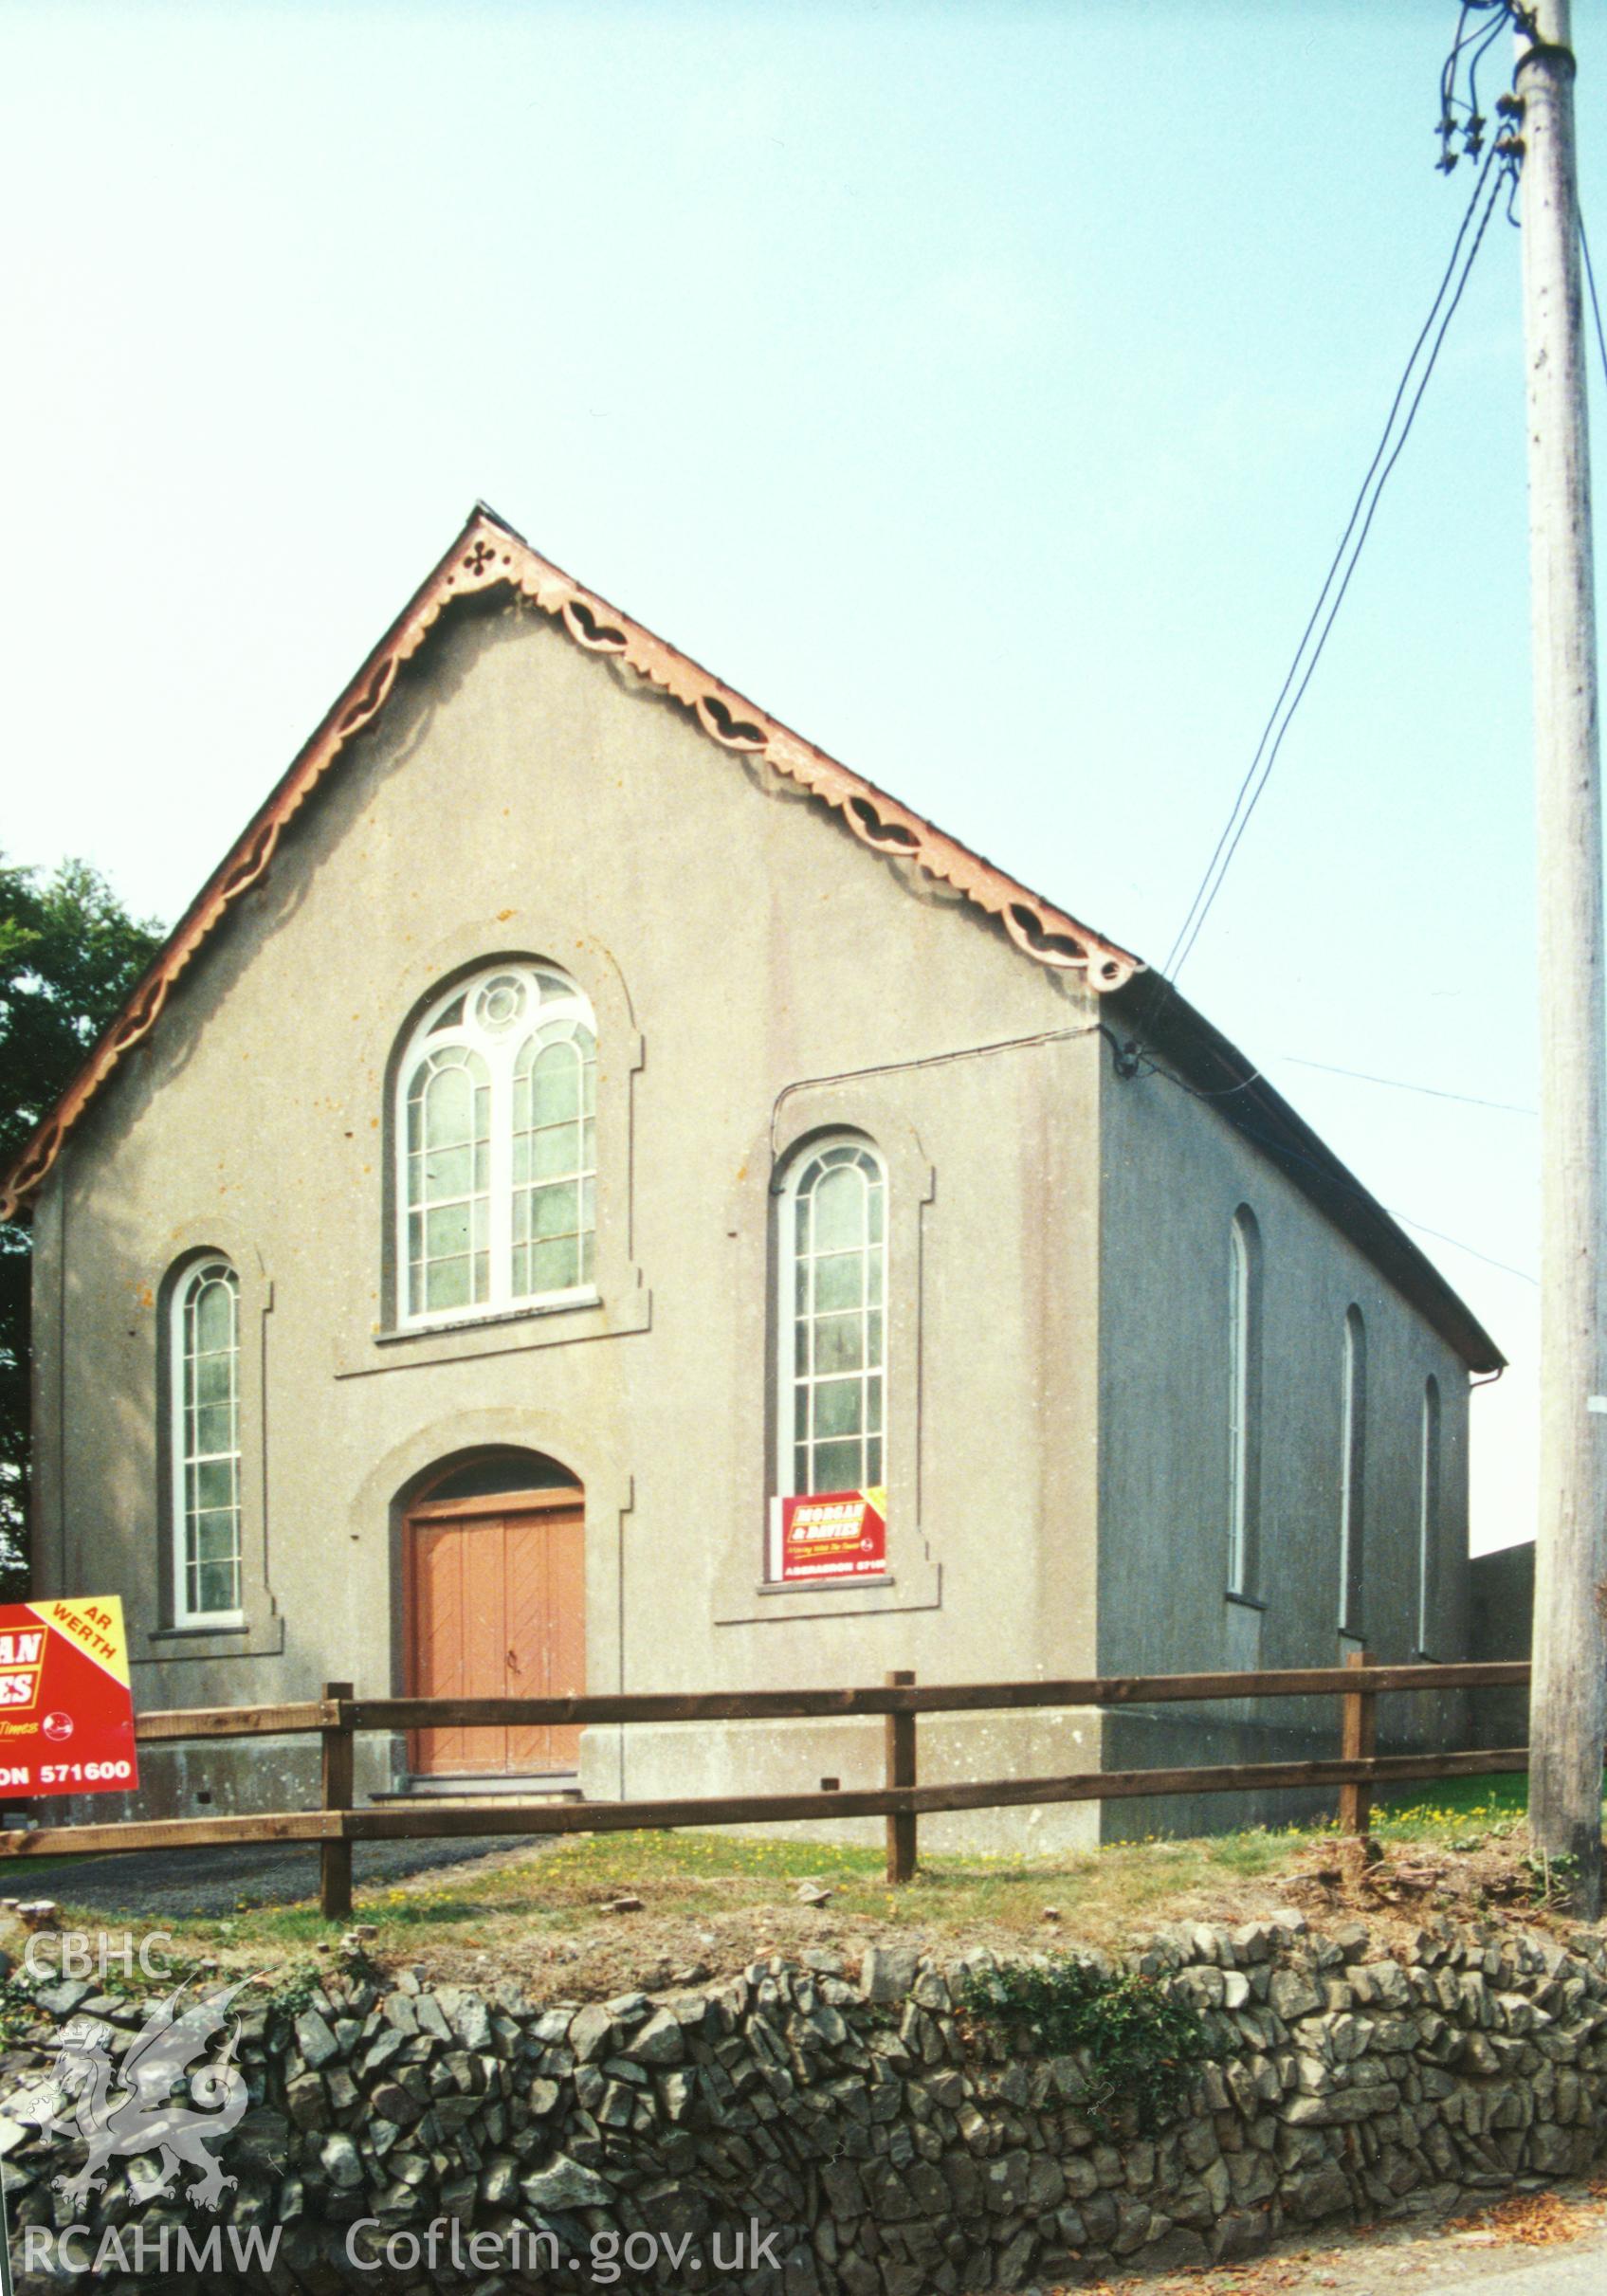 Digital copy of a colour photograph showing an exterior view of Neuadd Welsh Calvinistic Methodist Chapel, Nanternis, taken by Robert Scourfield, c.1996.